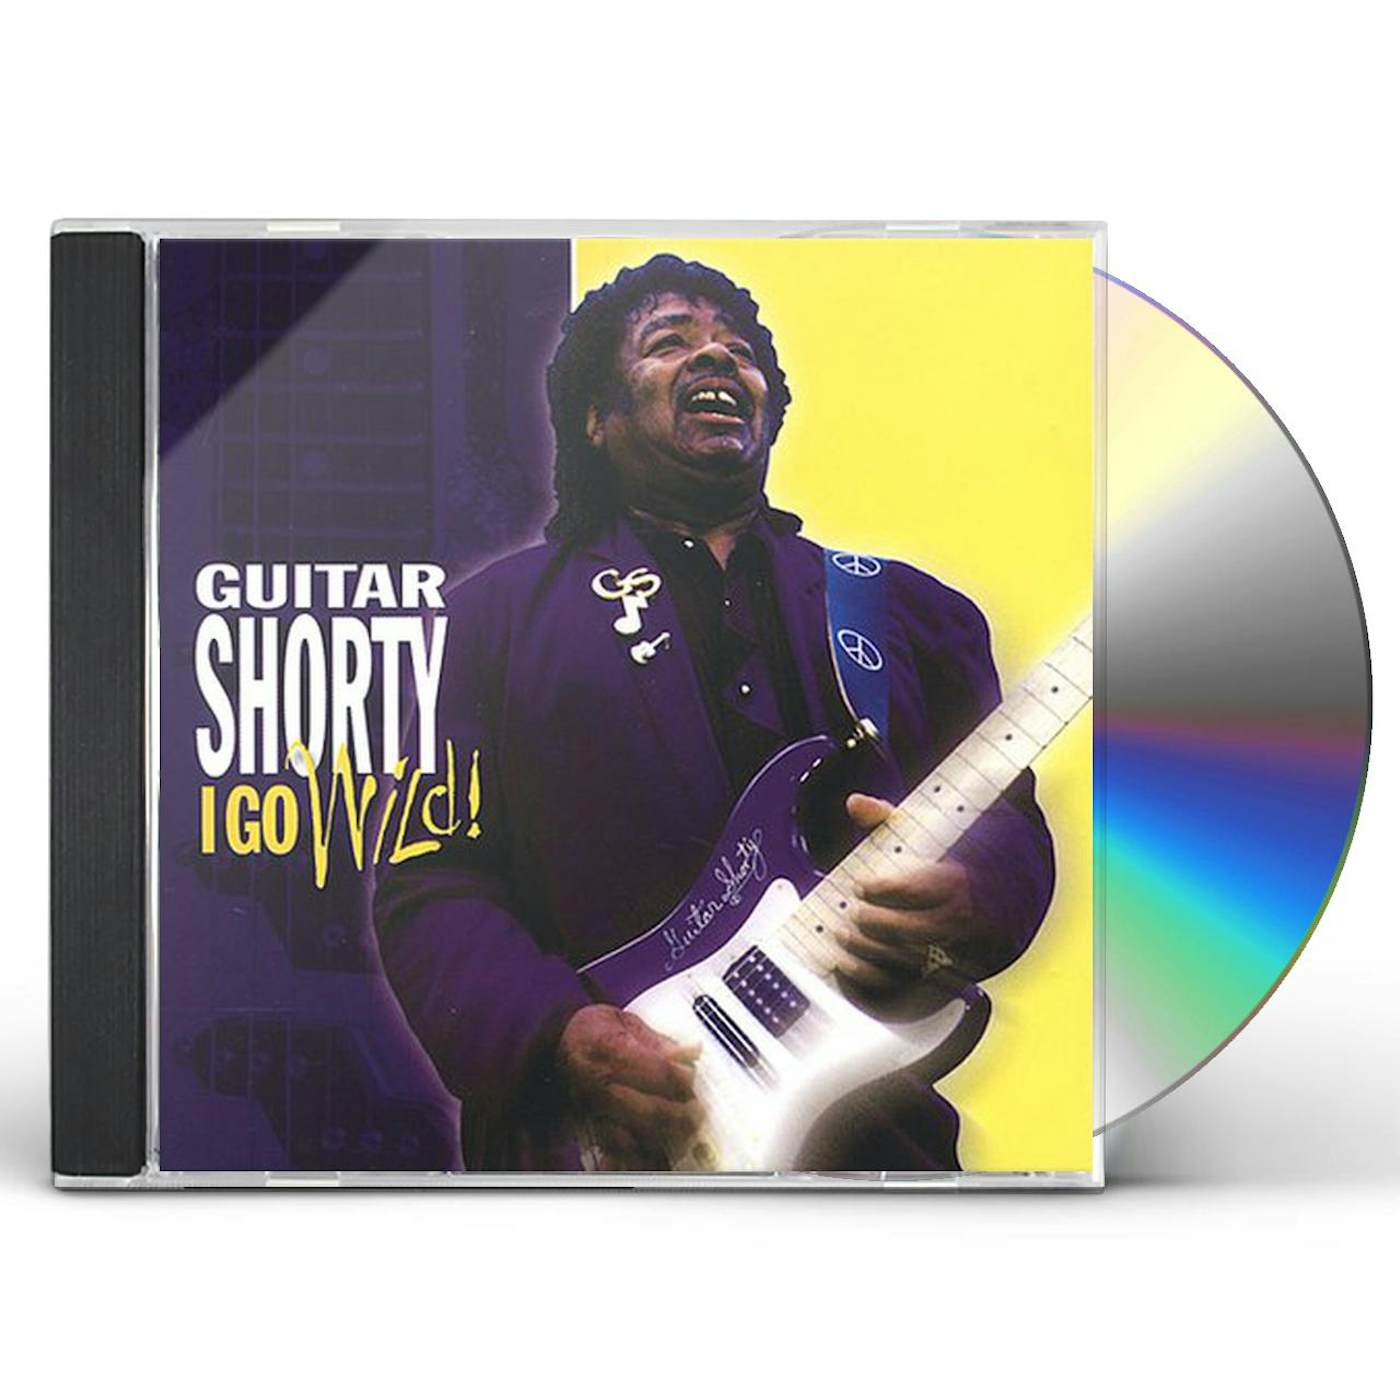 Guitar Shorty GO WILD CD